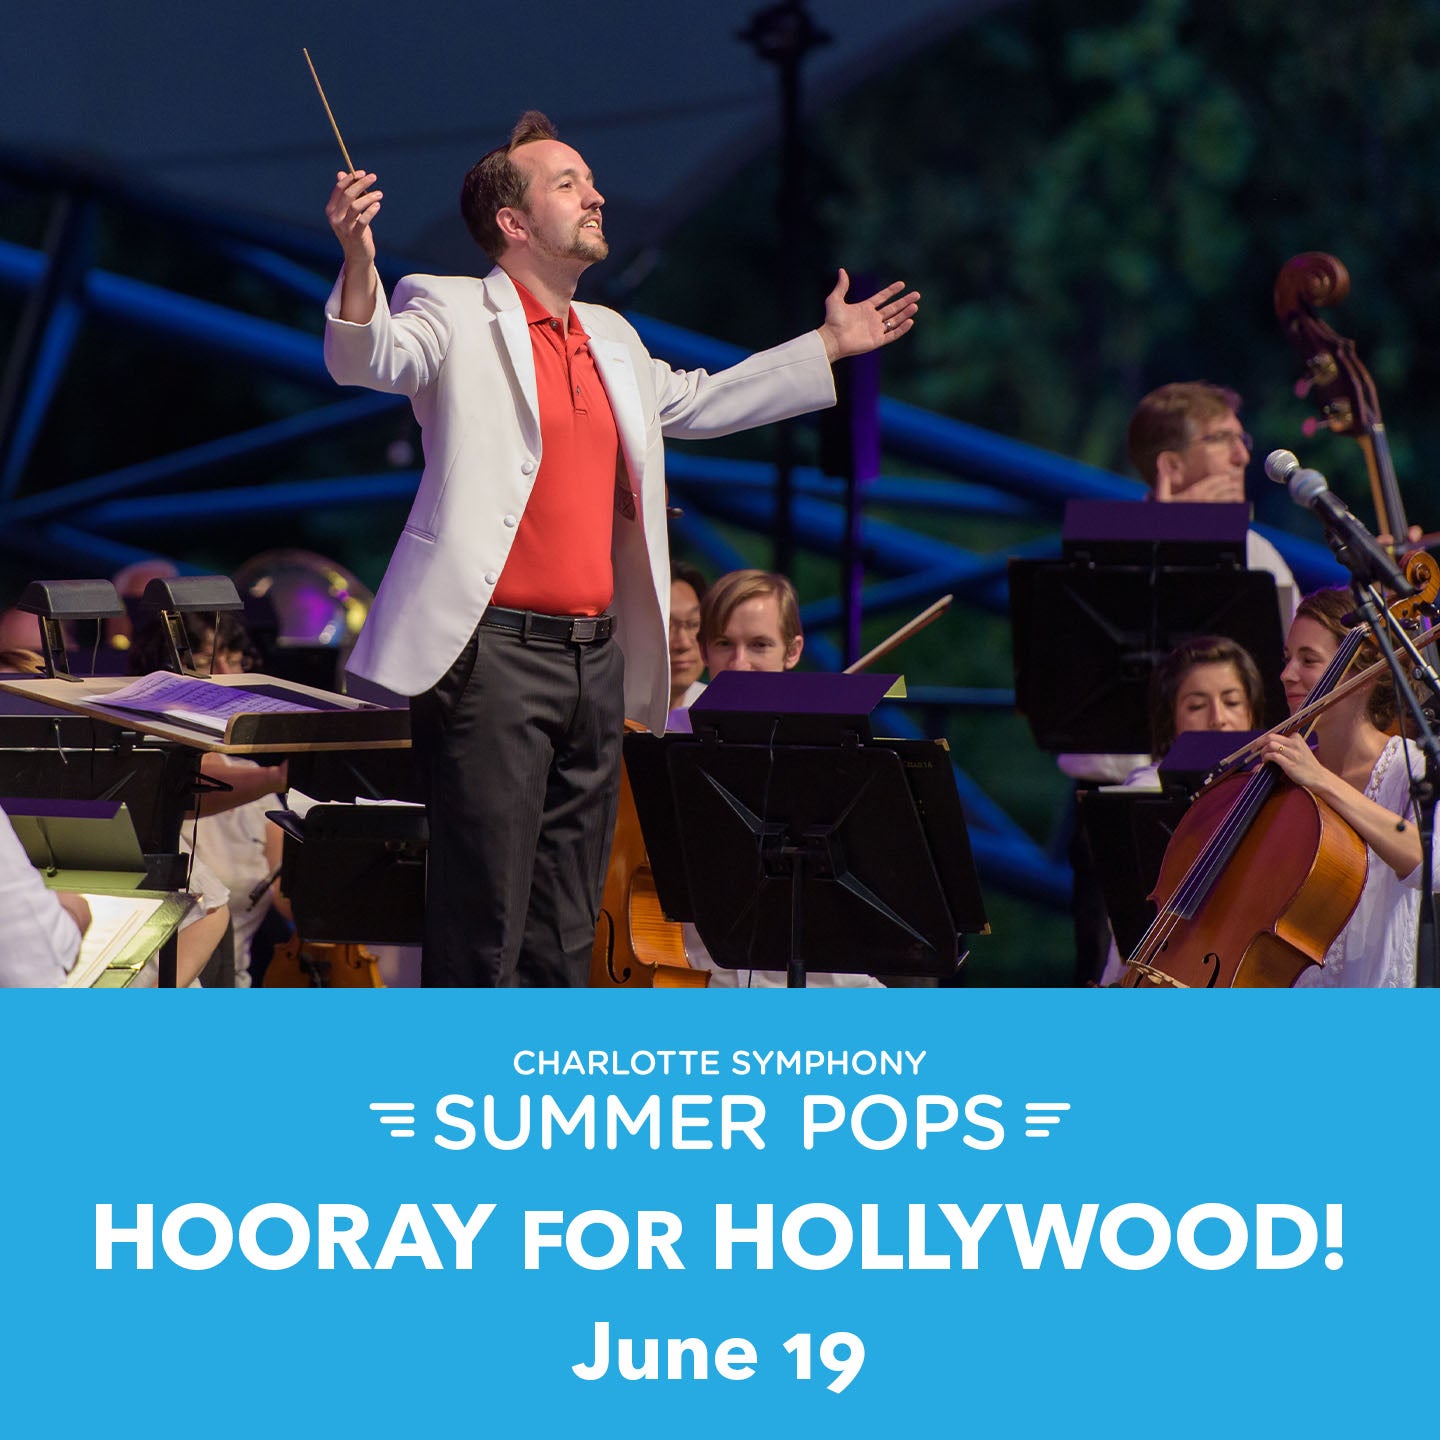 Charlotte Symphony: Summer Pops 2: Hooray for Hollywood